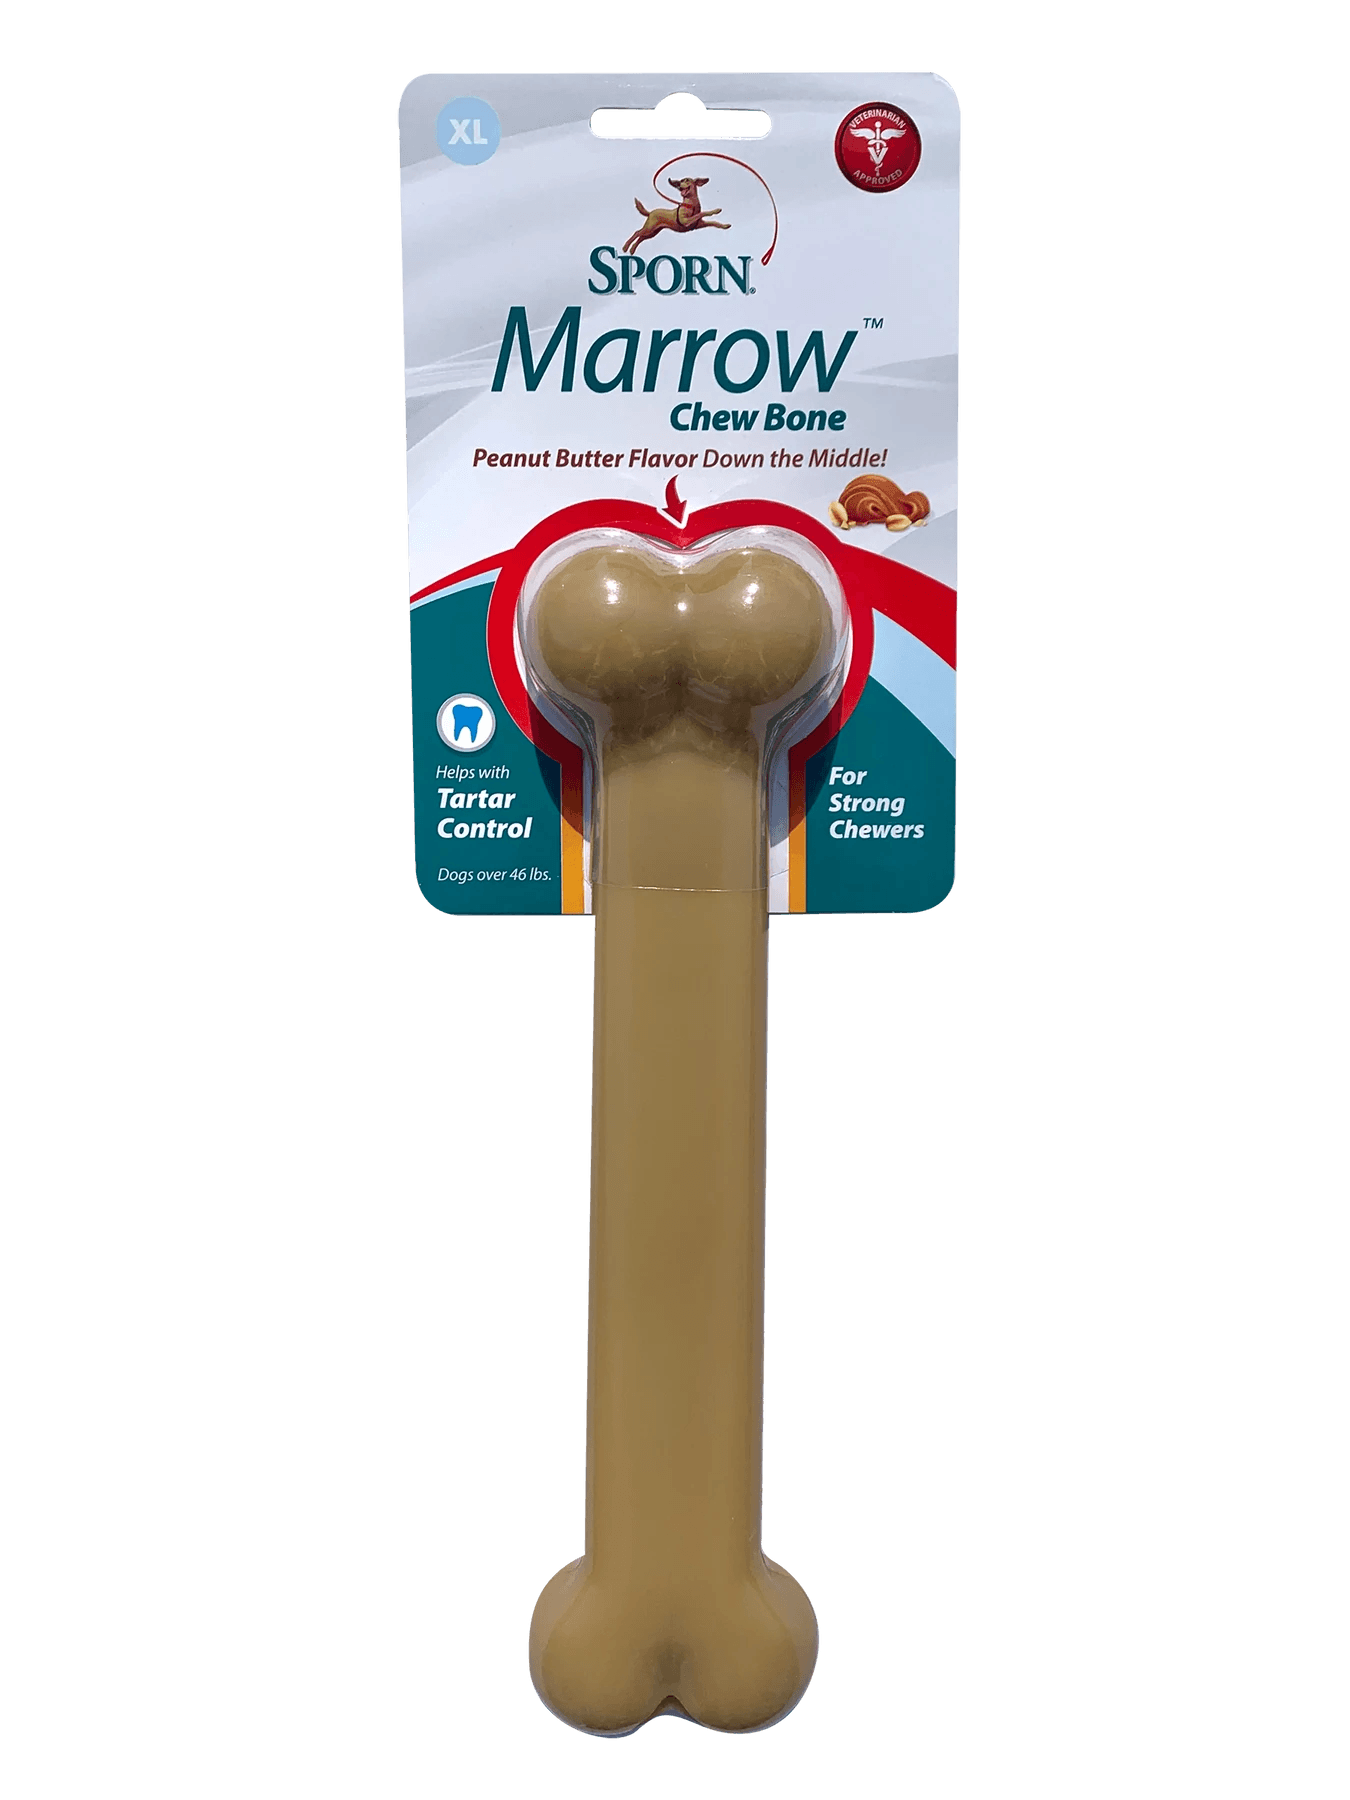 Sporn Marrow Chew Bone Peanut Butter - Woonona Petfood & Produce